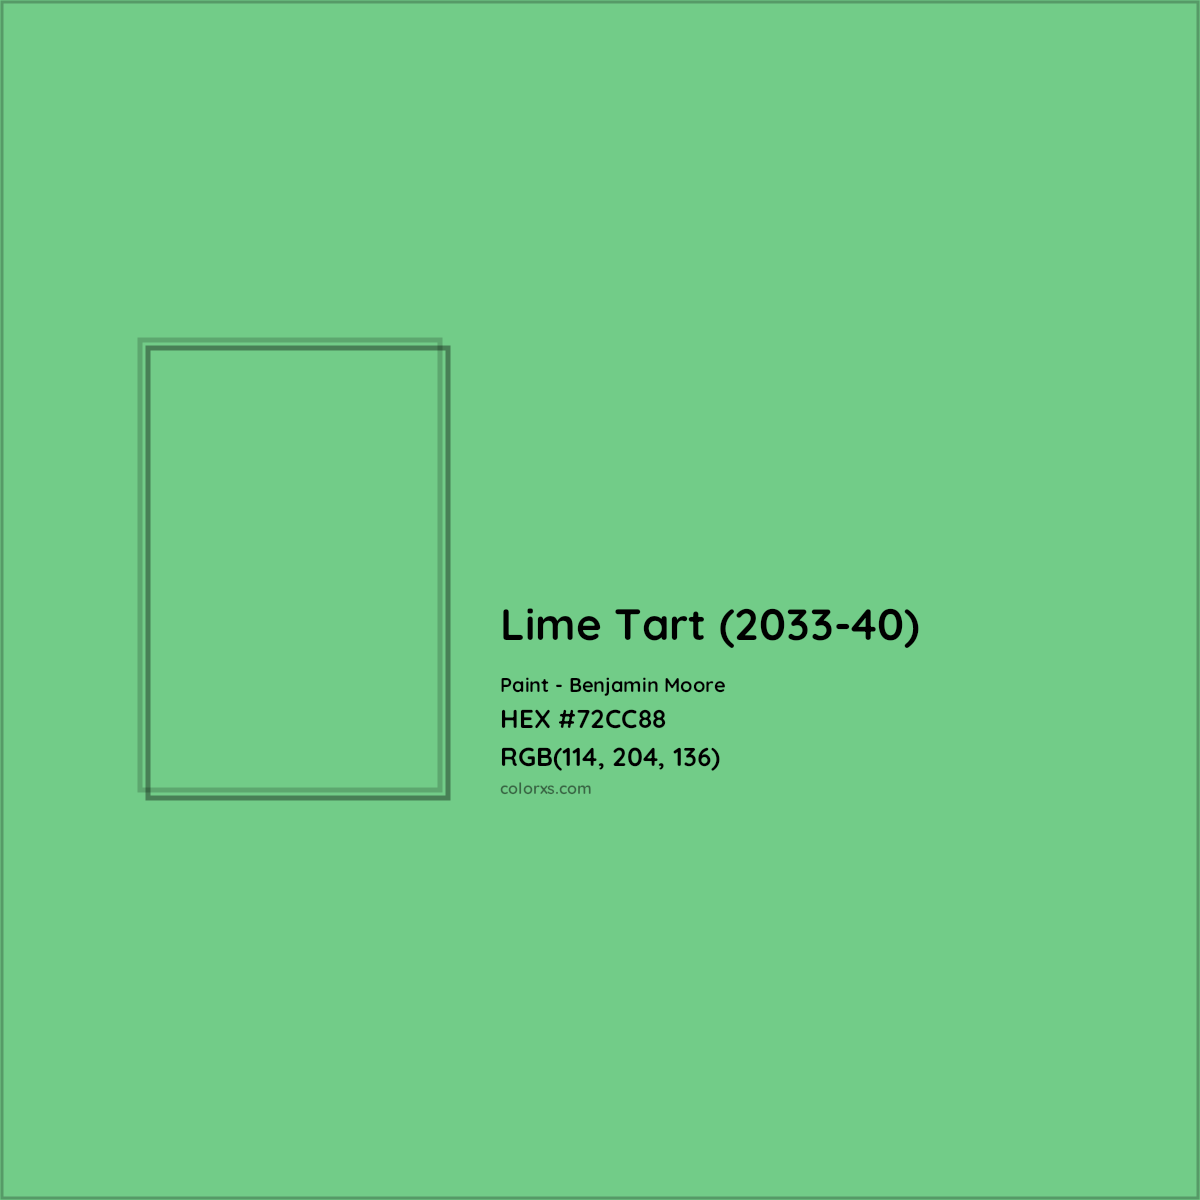 HEX #72CC88 Lime Tart (2033-40) Paint Benjamin Moore - Color Code